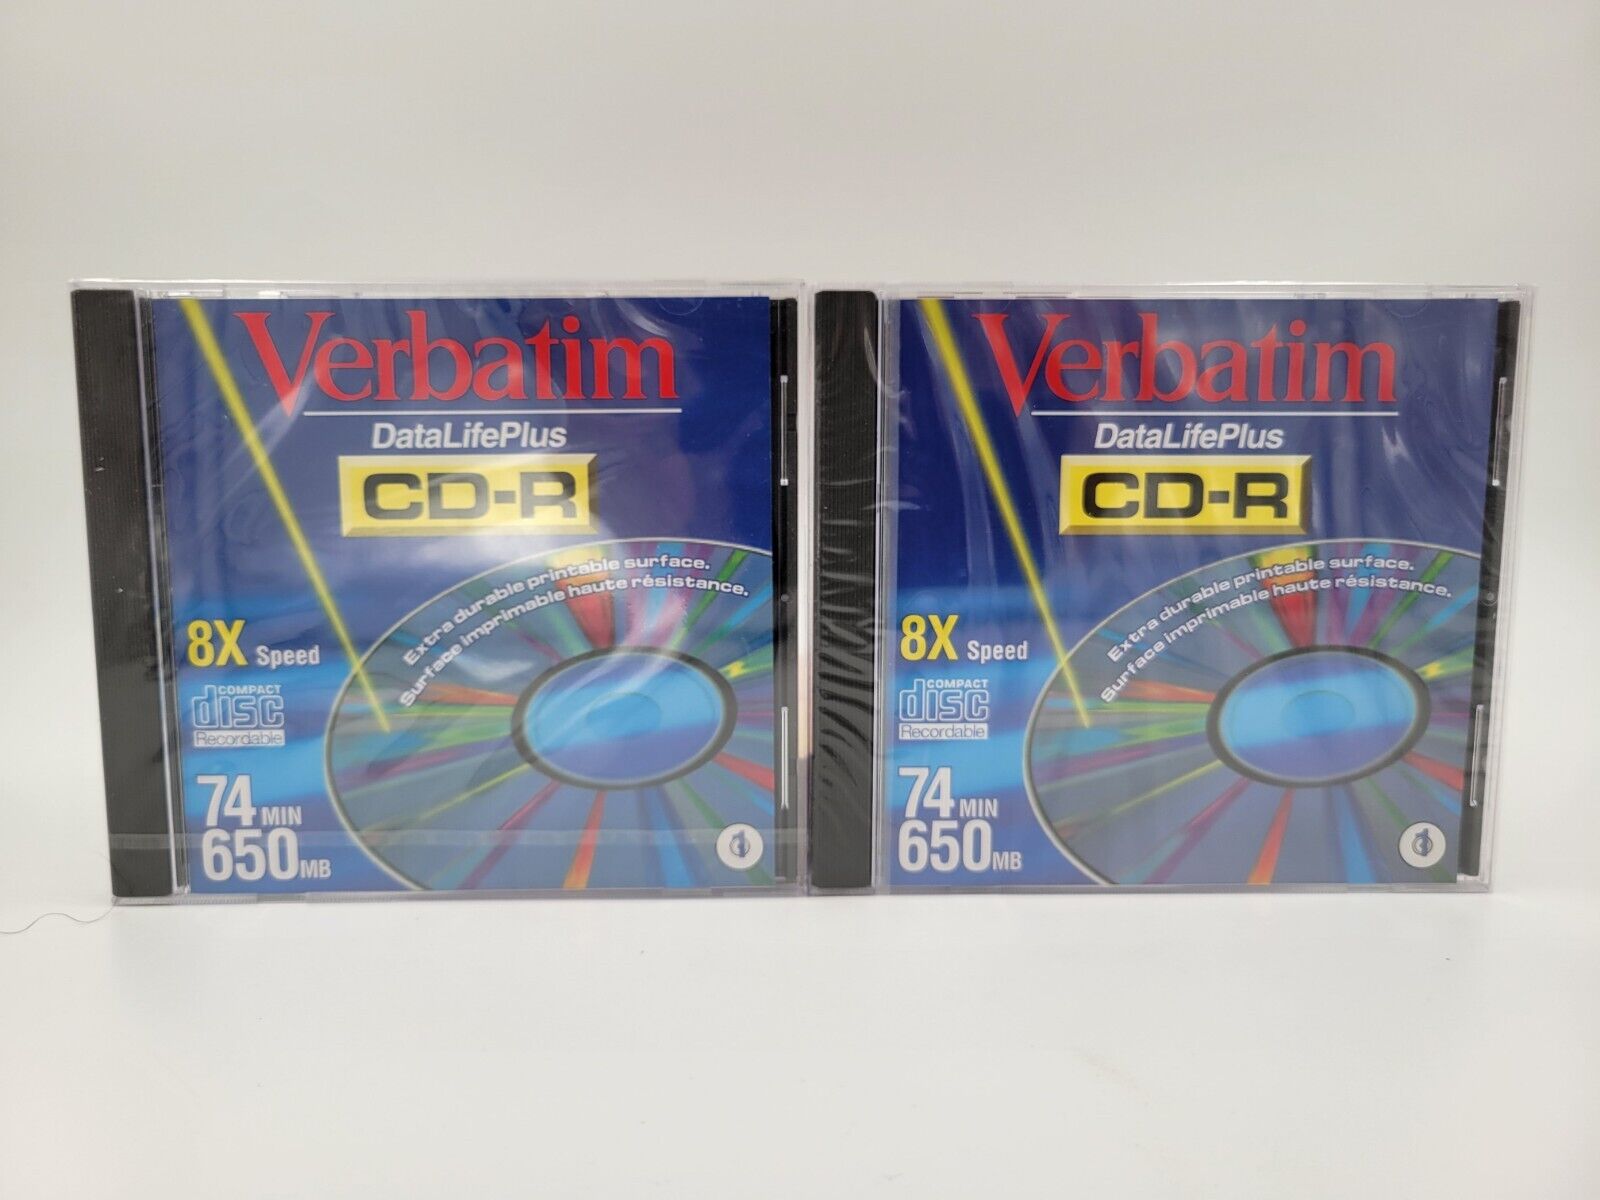  VERBATIM DATA LIFE PLUS CD-R 650 MB 8X SPEED BRAND NEW Factory Sealed Lot Of 2